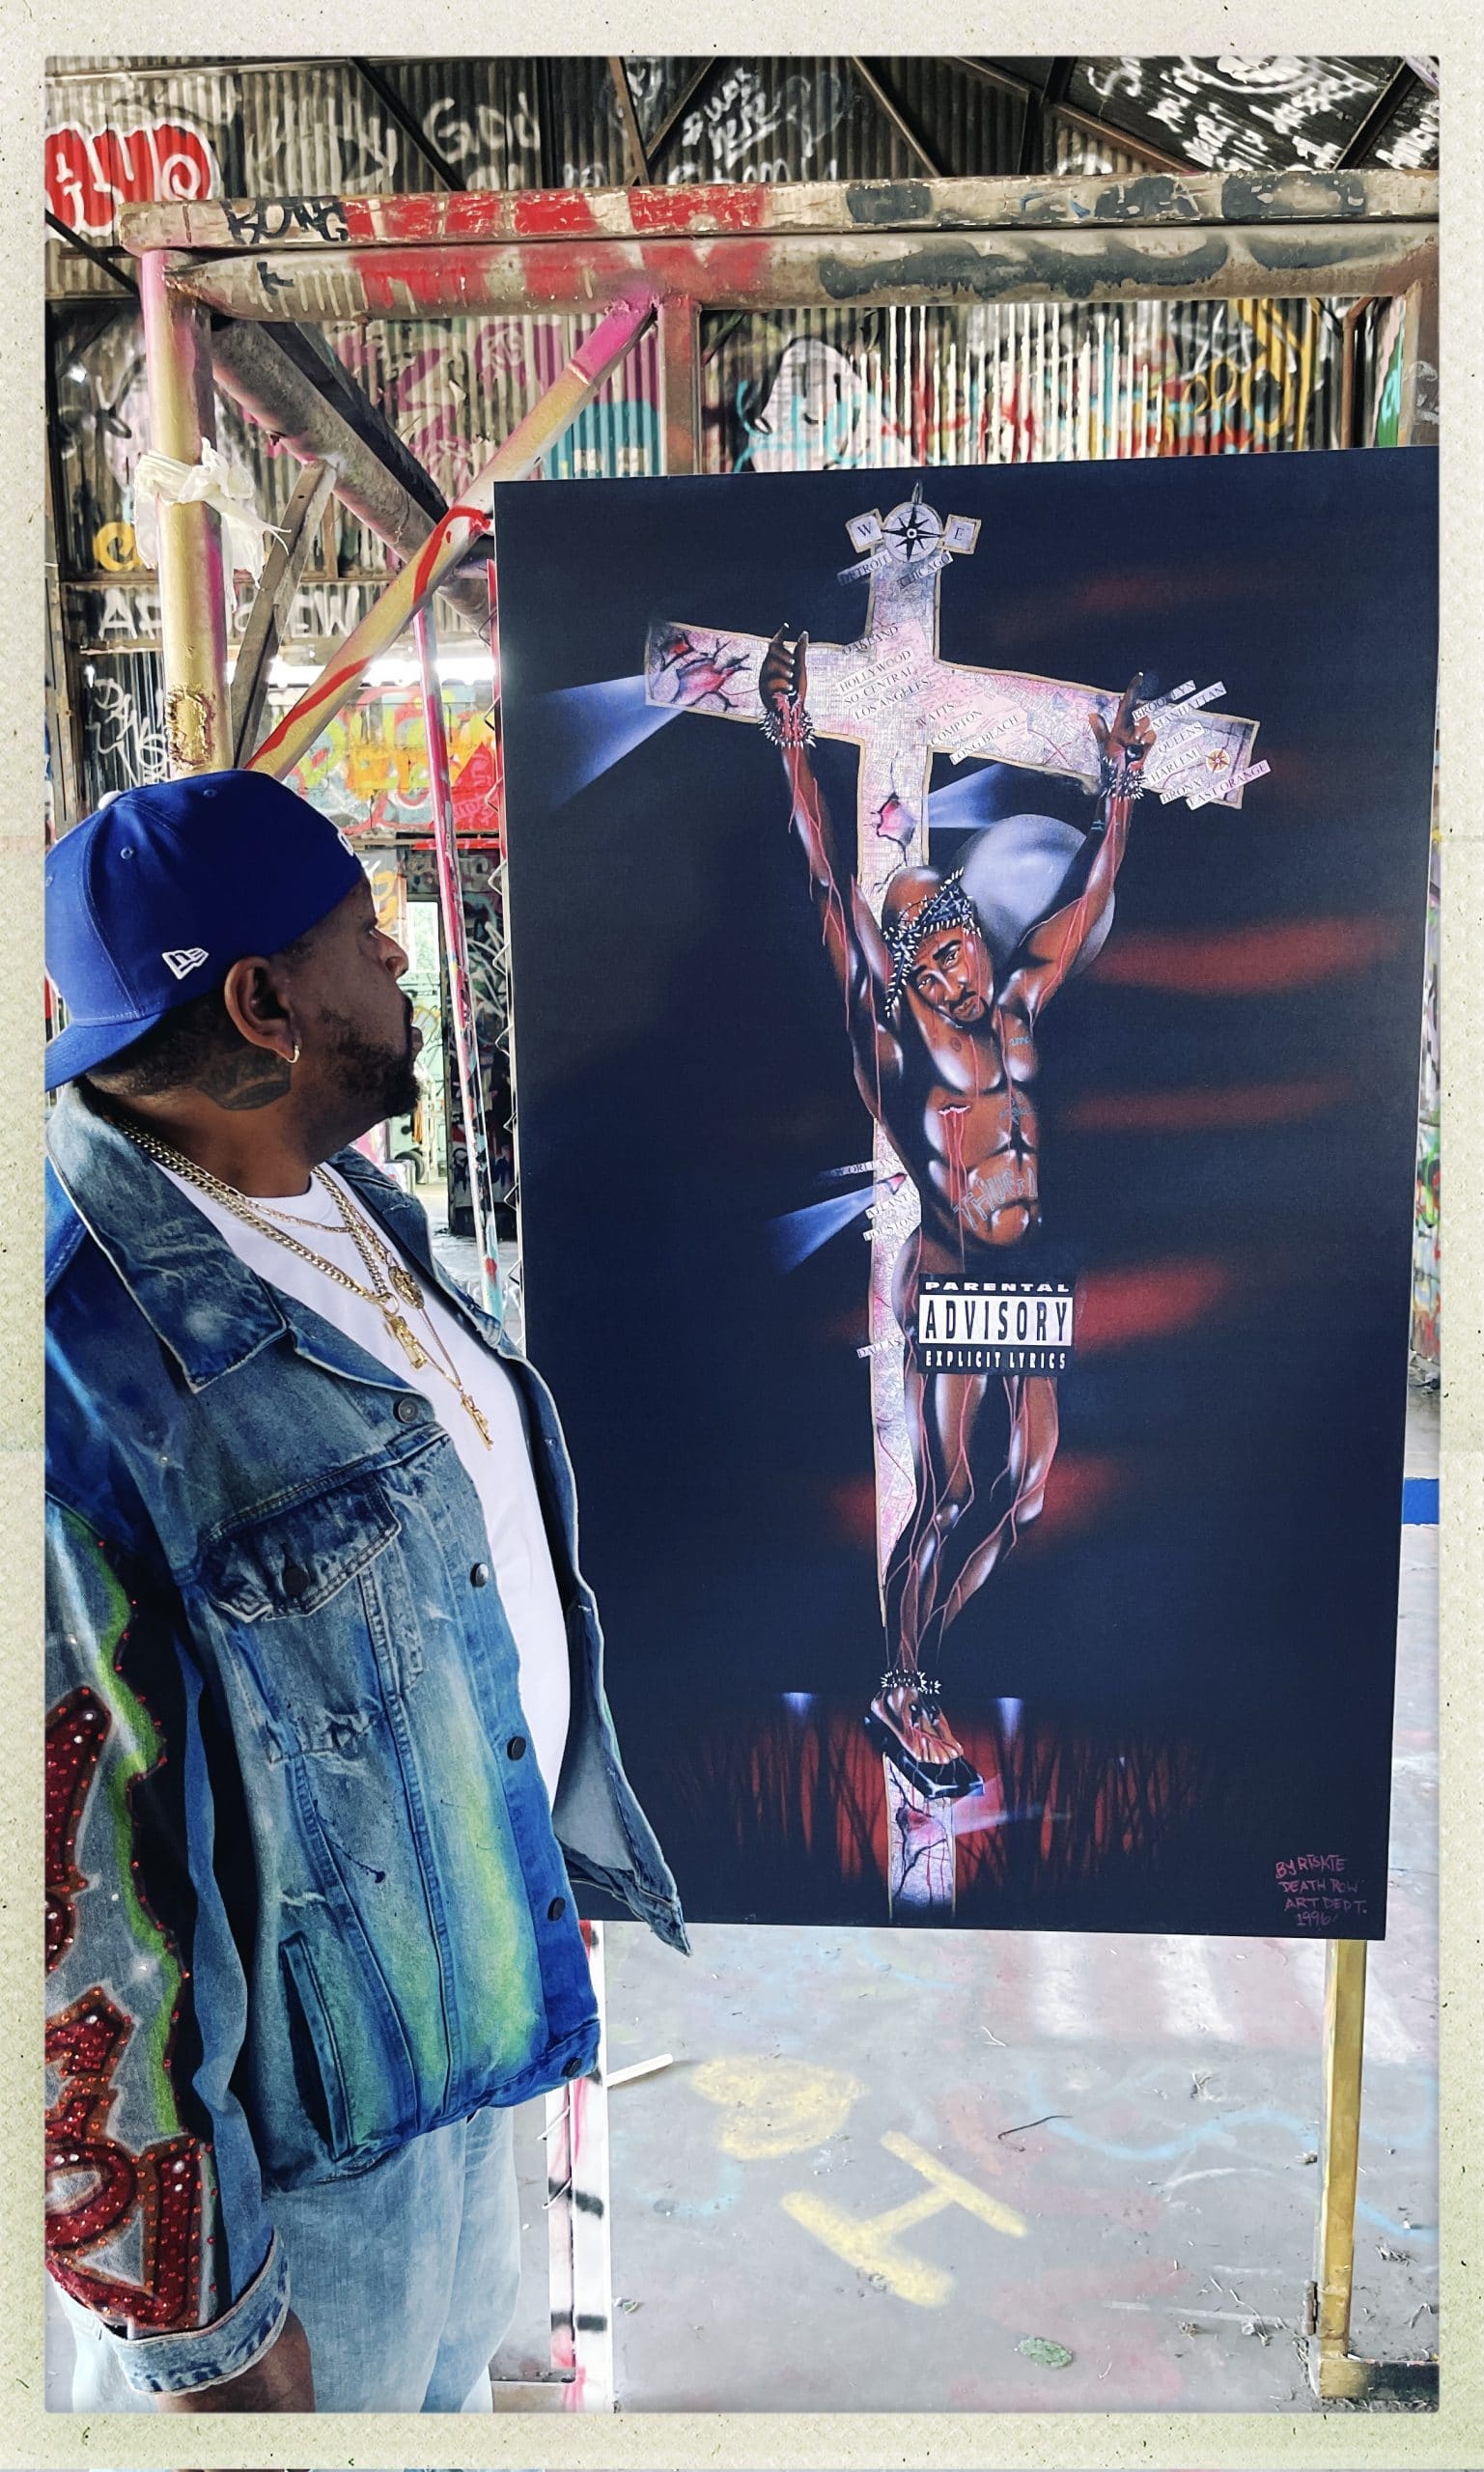 Image of Riskie Forever next to his original Tupac artwork.